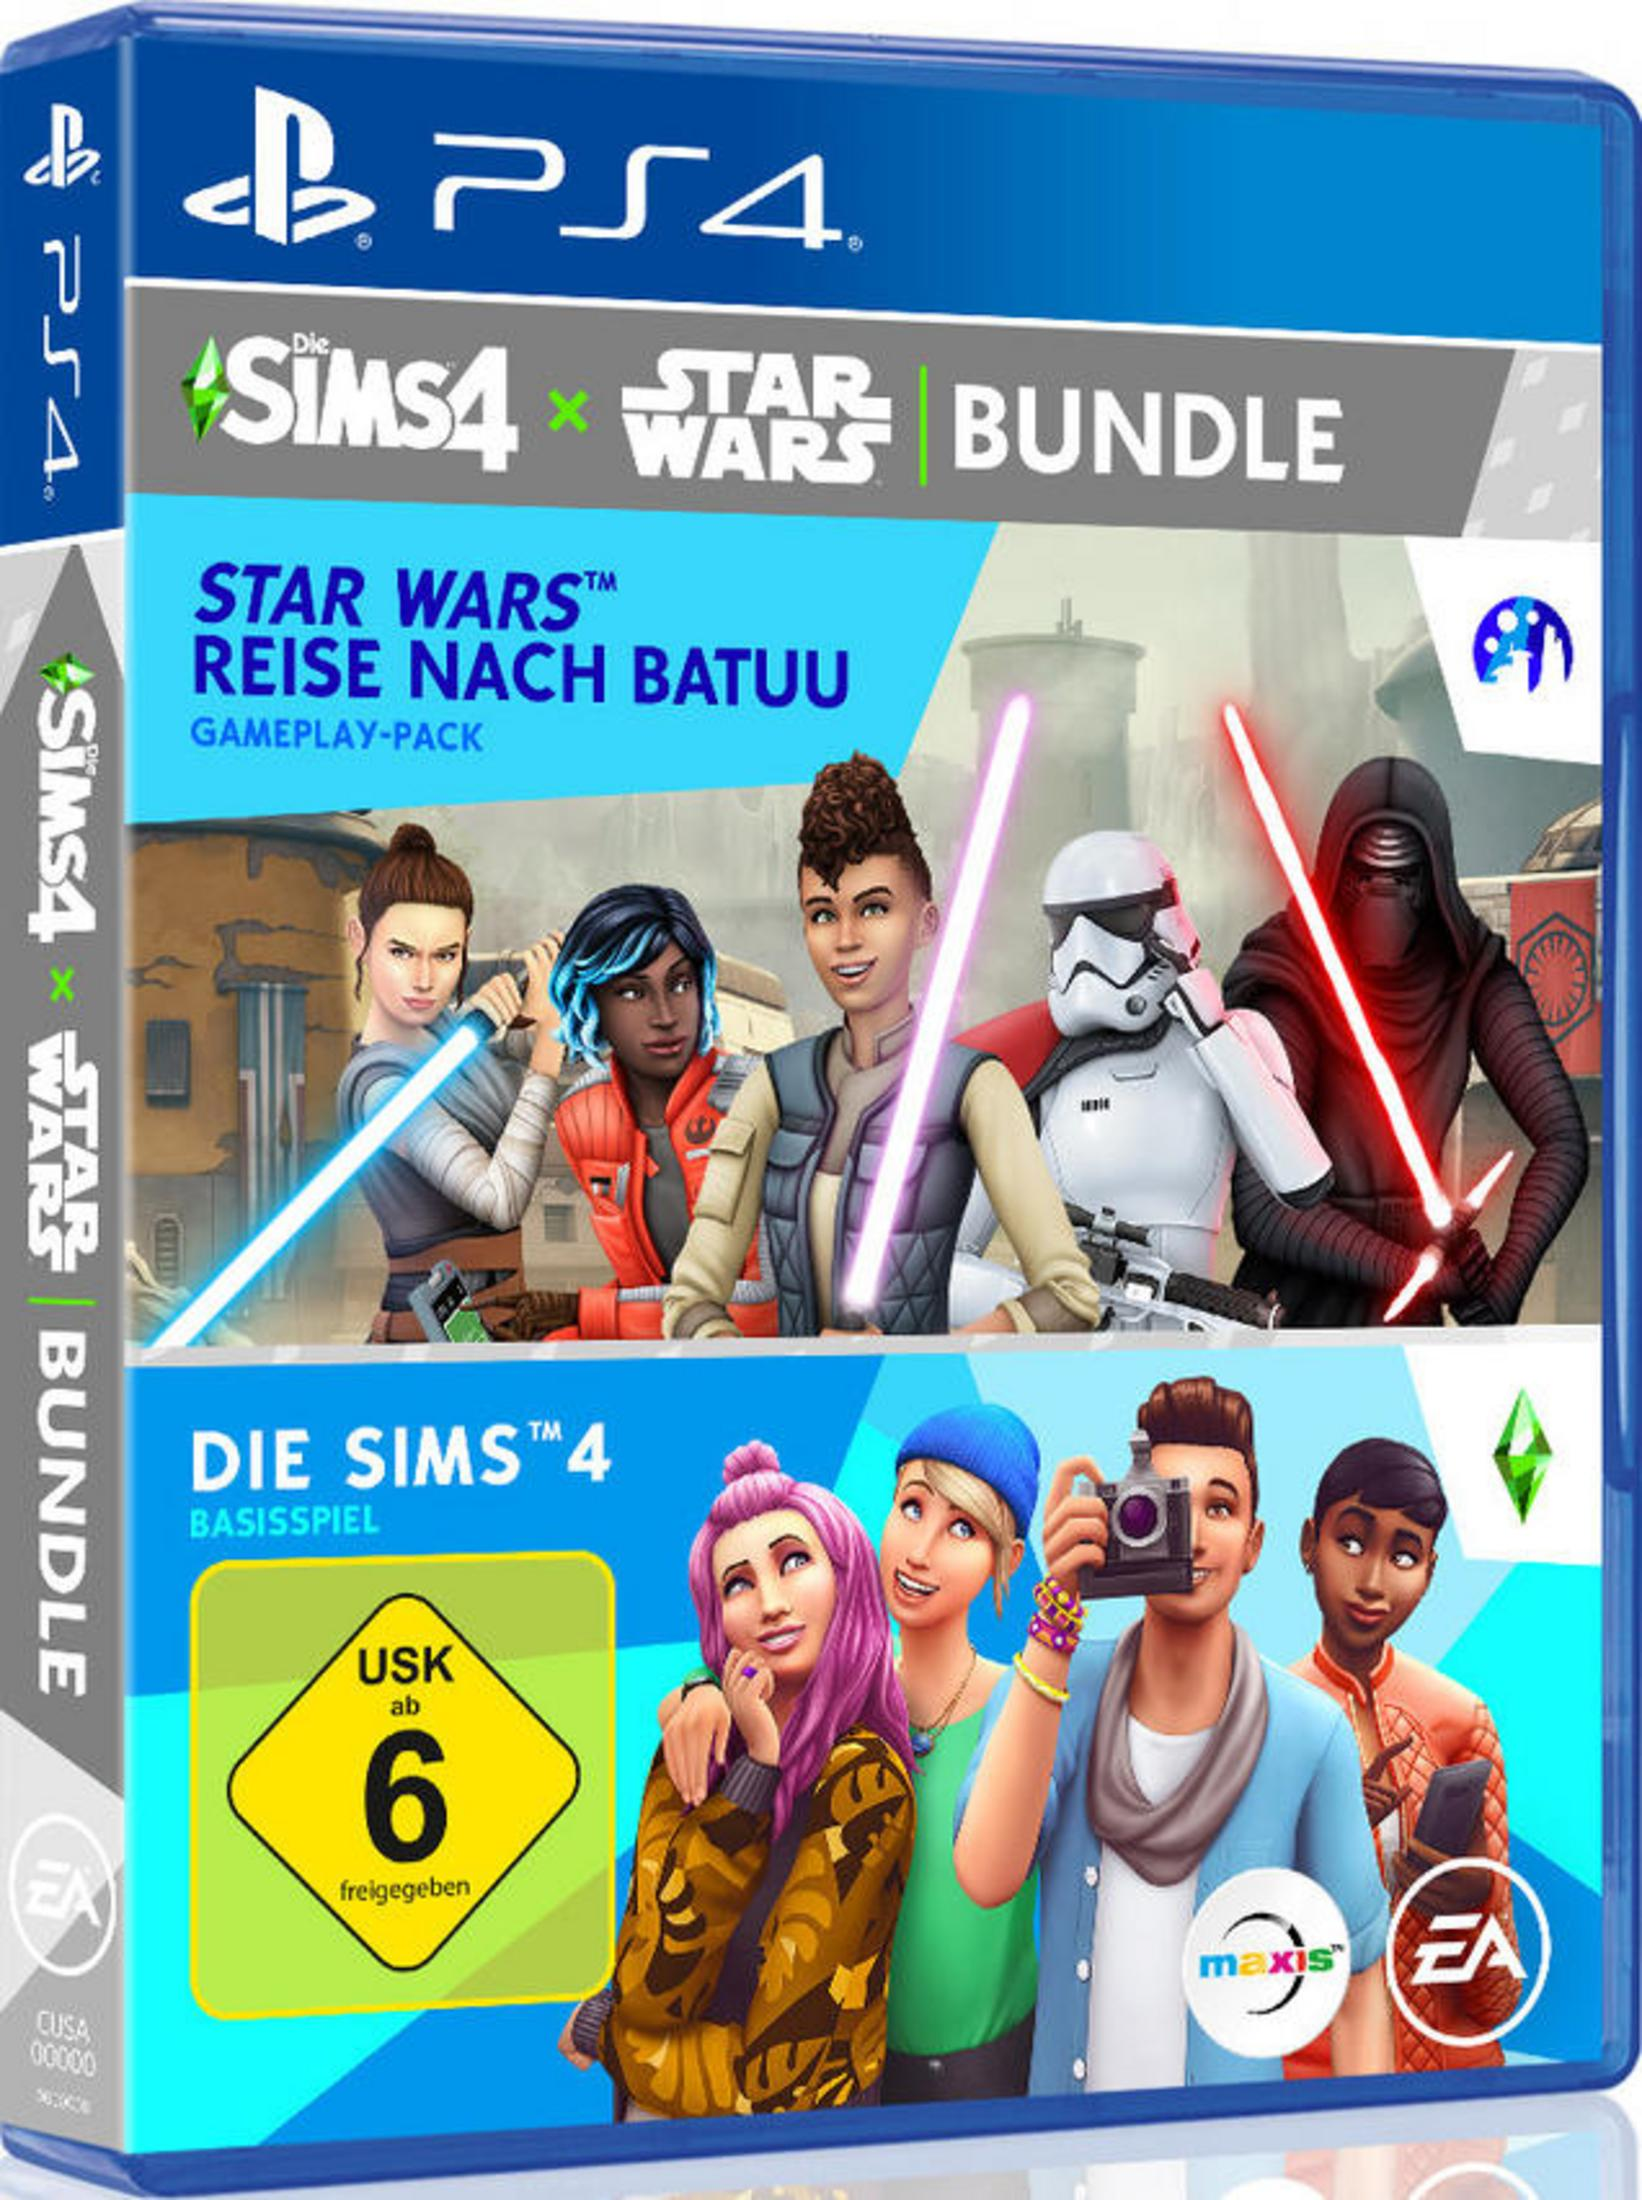 Sims 4 PS-4 4] Star - + Batuu n. Bdl Reise SW [PlayStation Wars